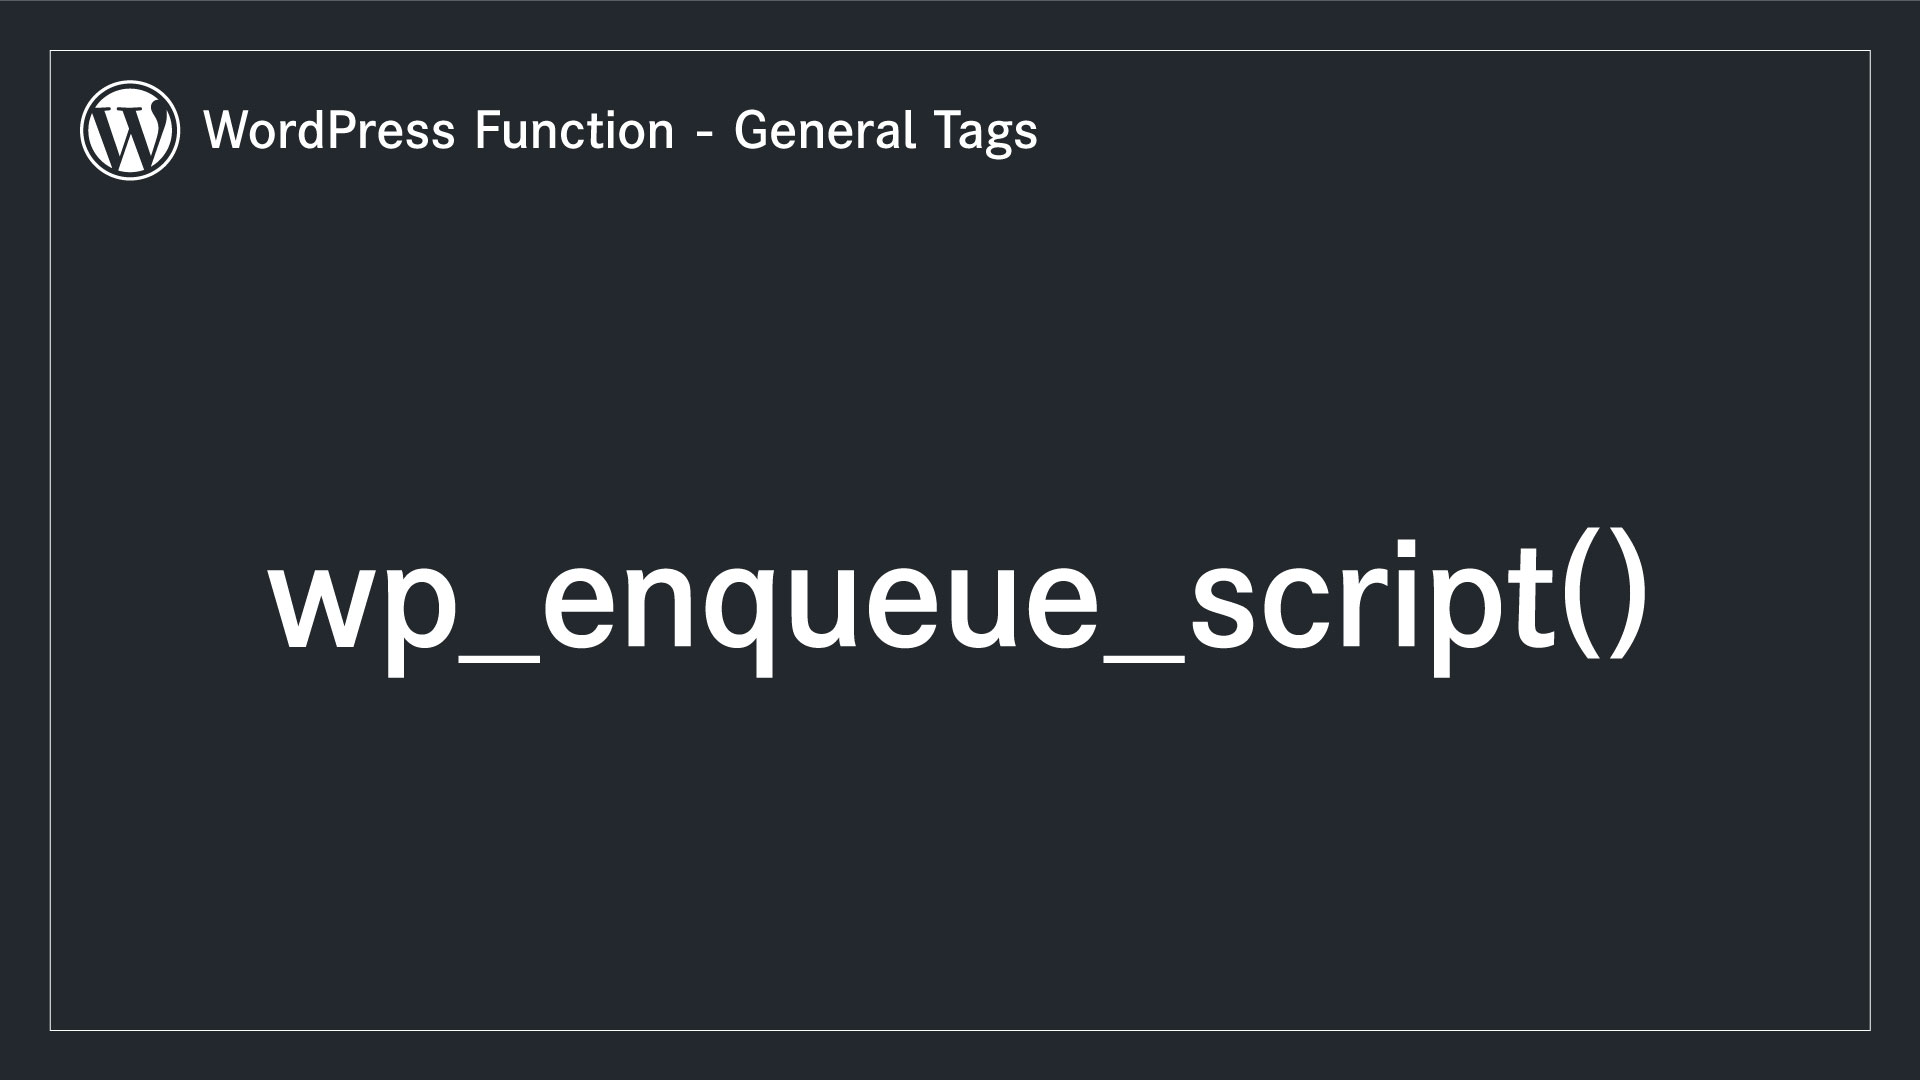 wp_enqueue_script() – スクリプトを読み込む関数